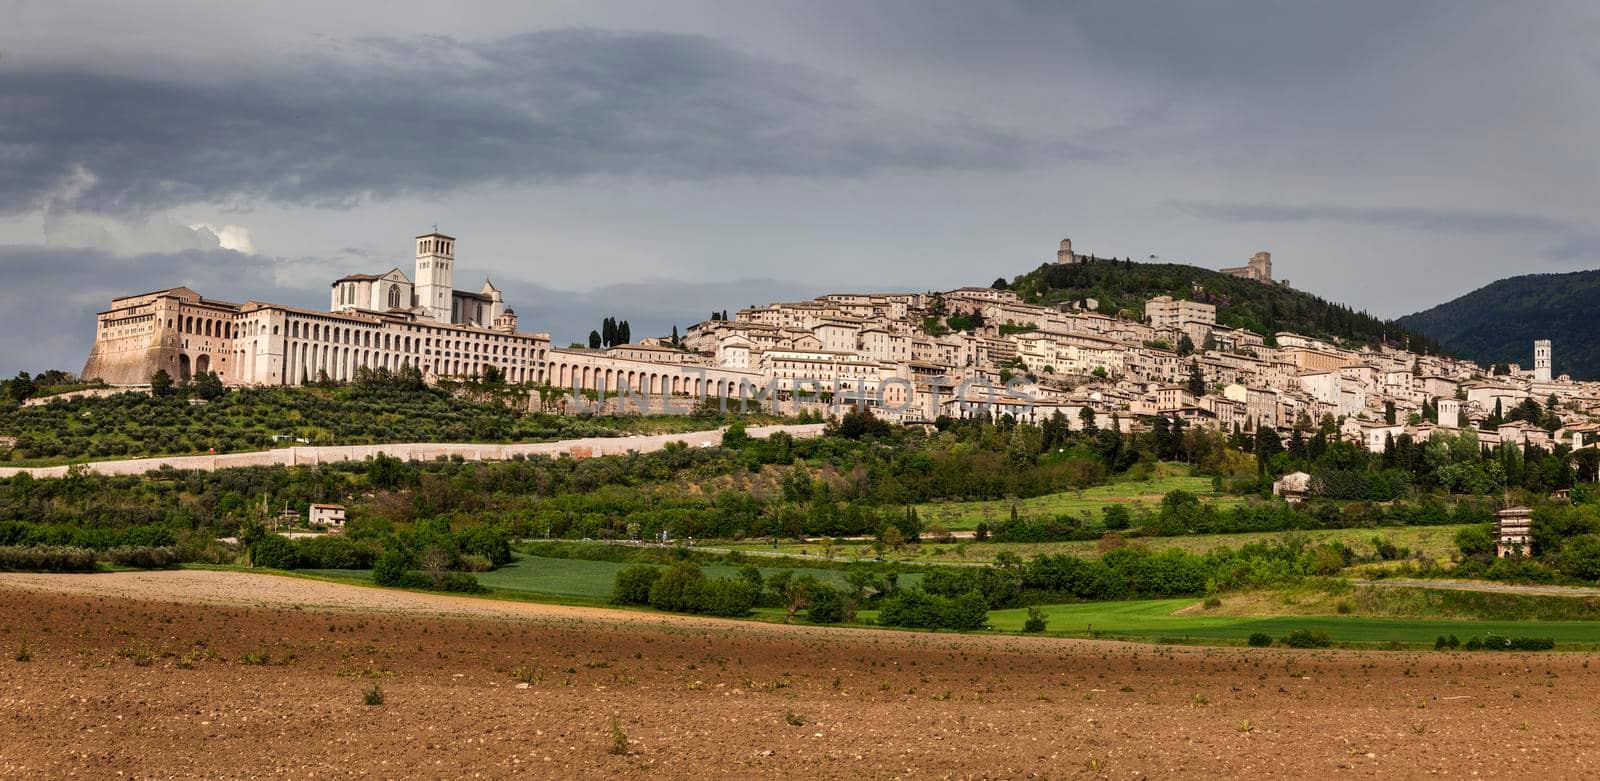 Panorama of Assisi  by benkrut